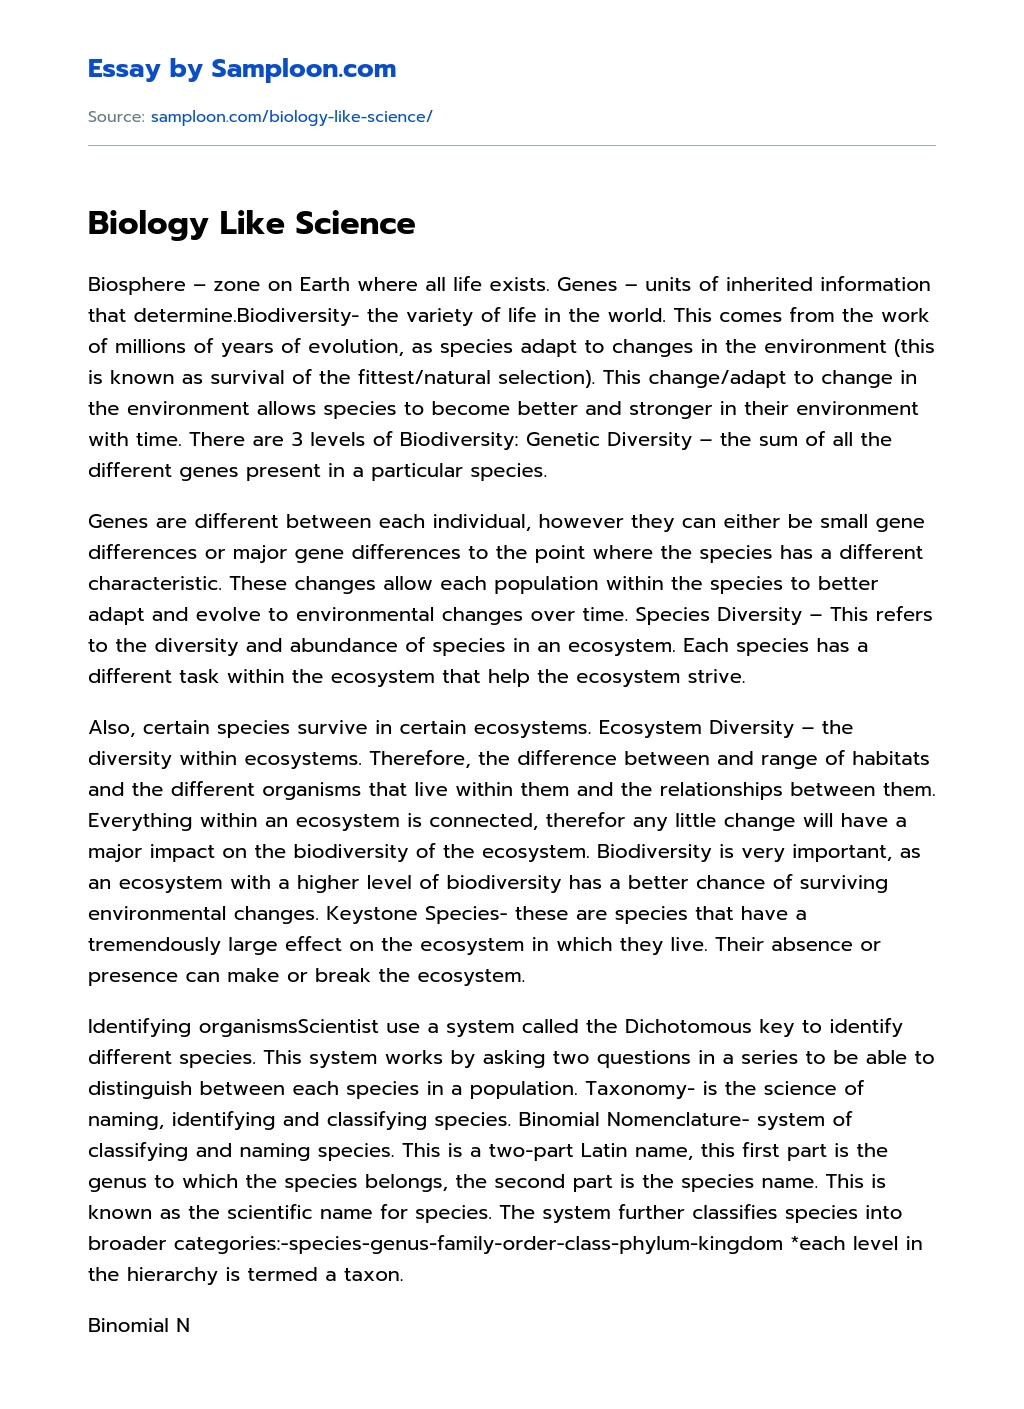 Biology Like Science essay